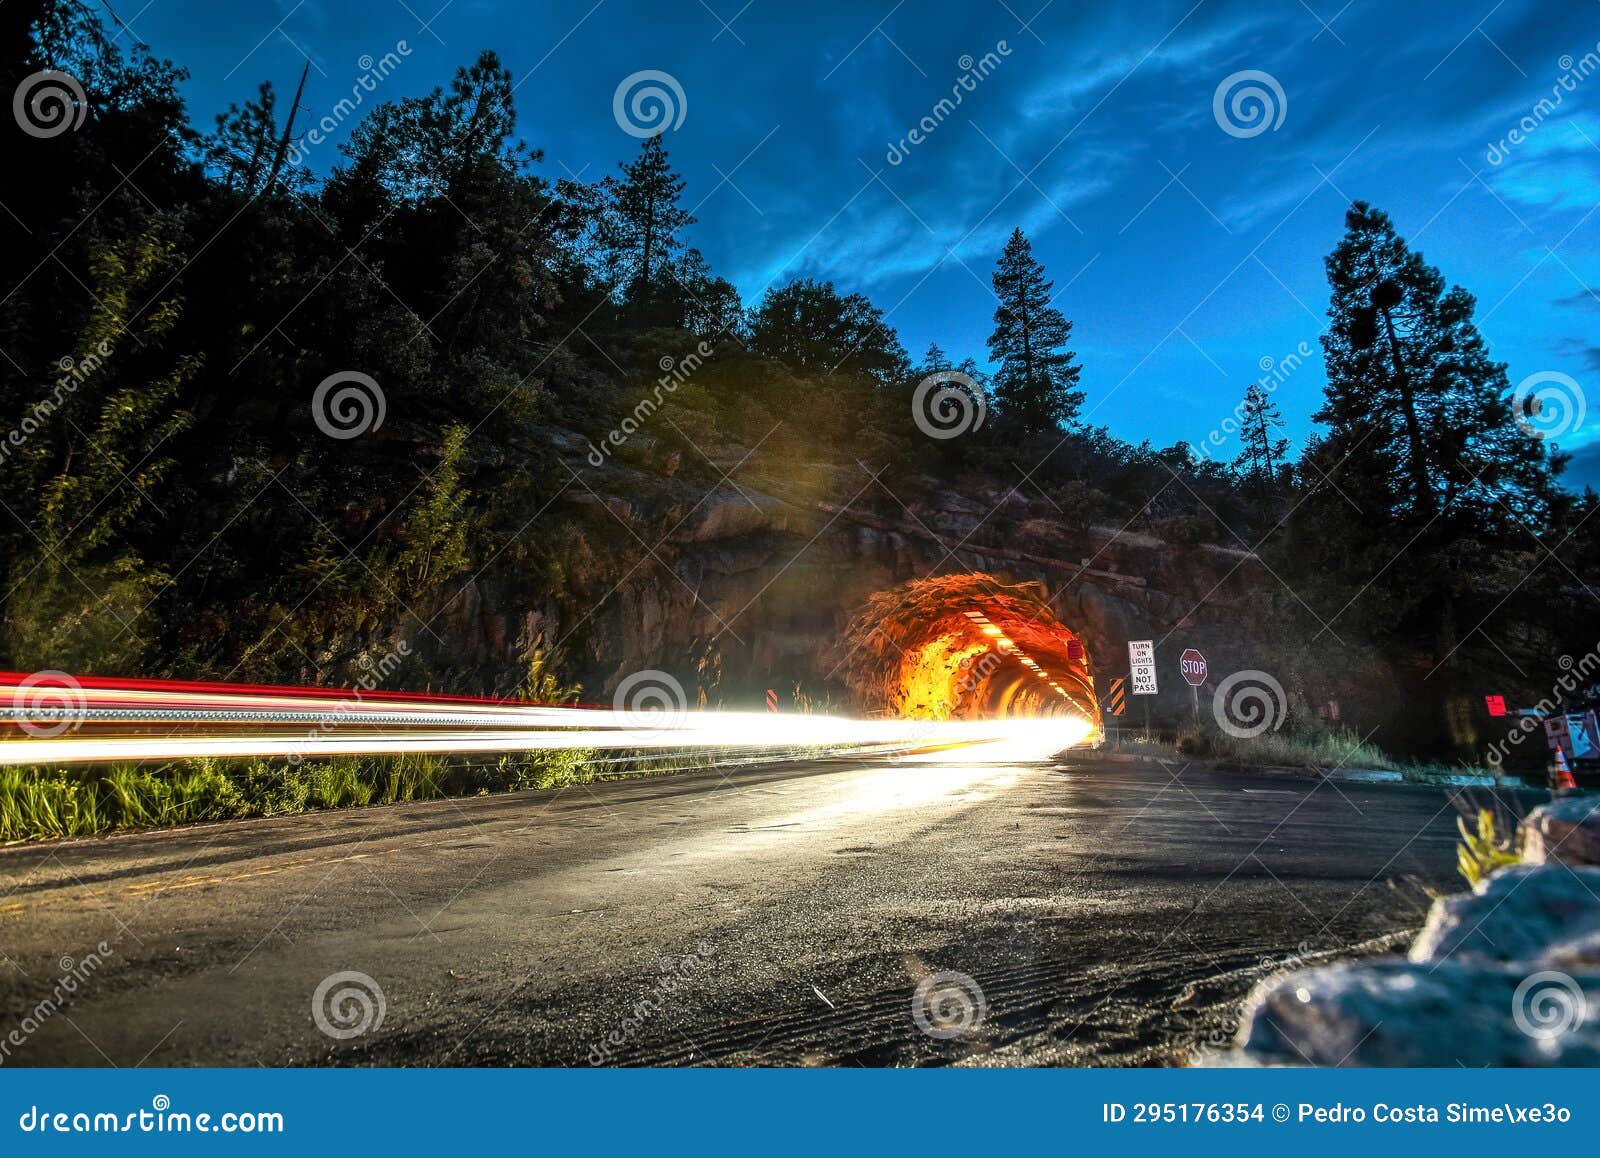 light trails by wawona tunnel at night - yosemite national park, california